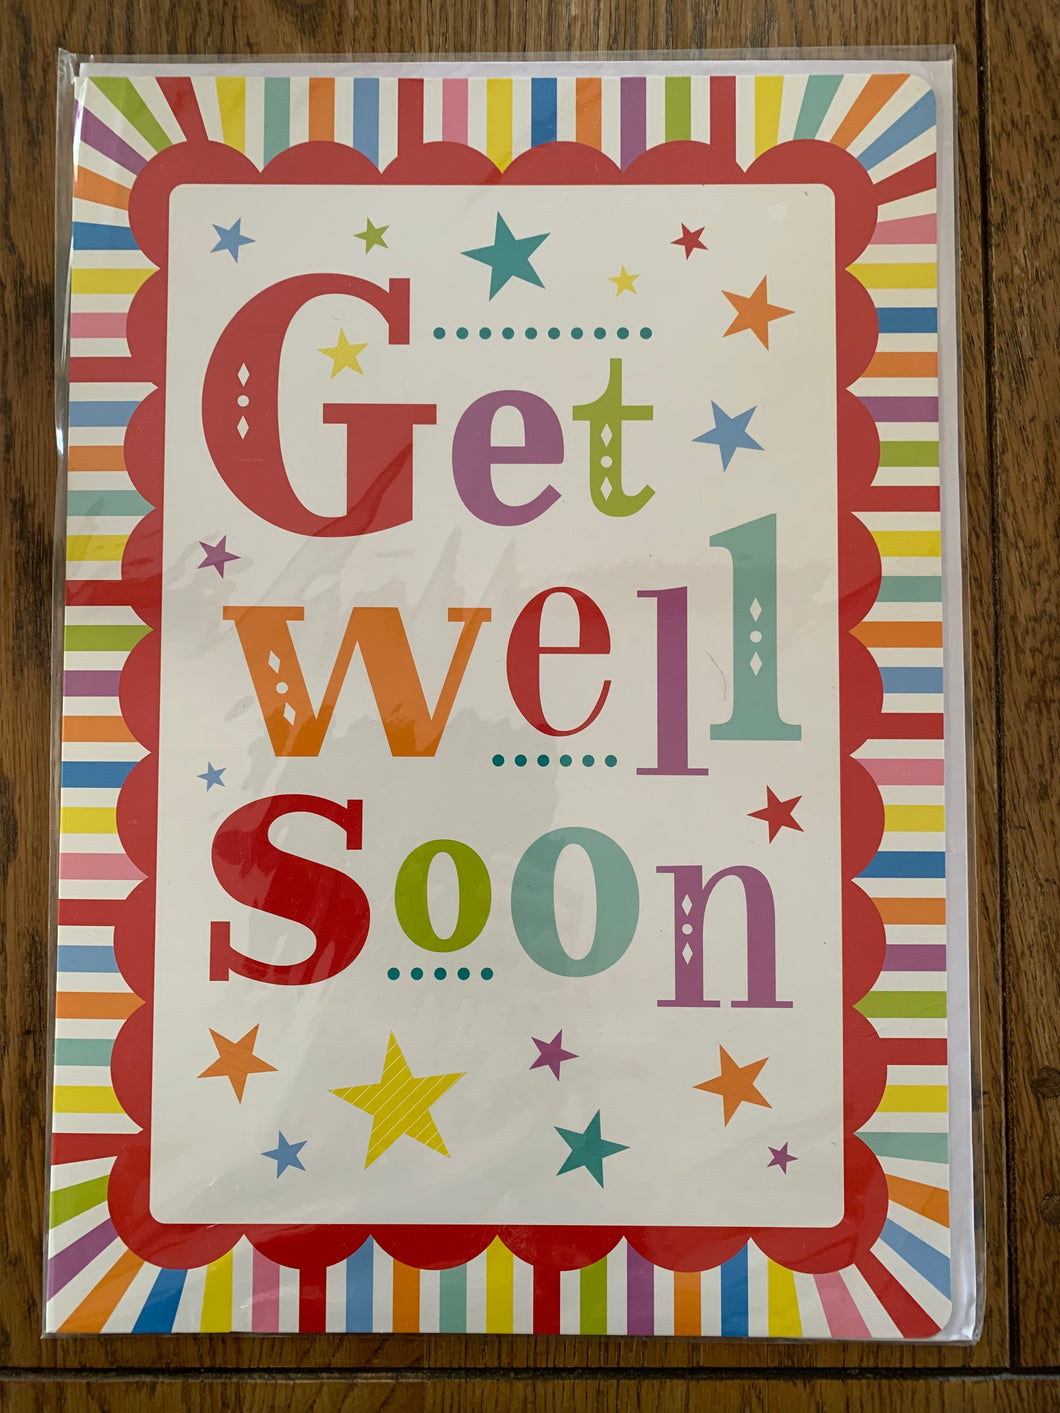 Get Well Soon Card